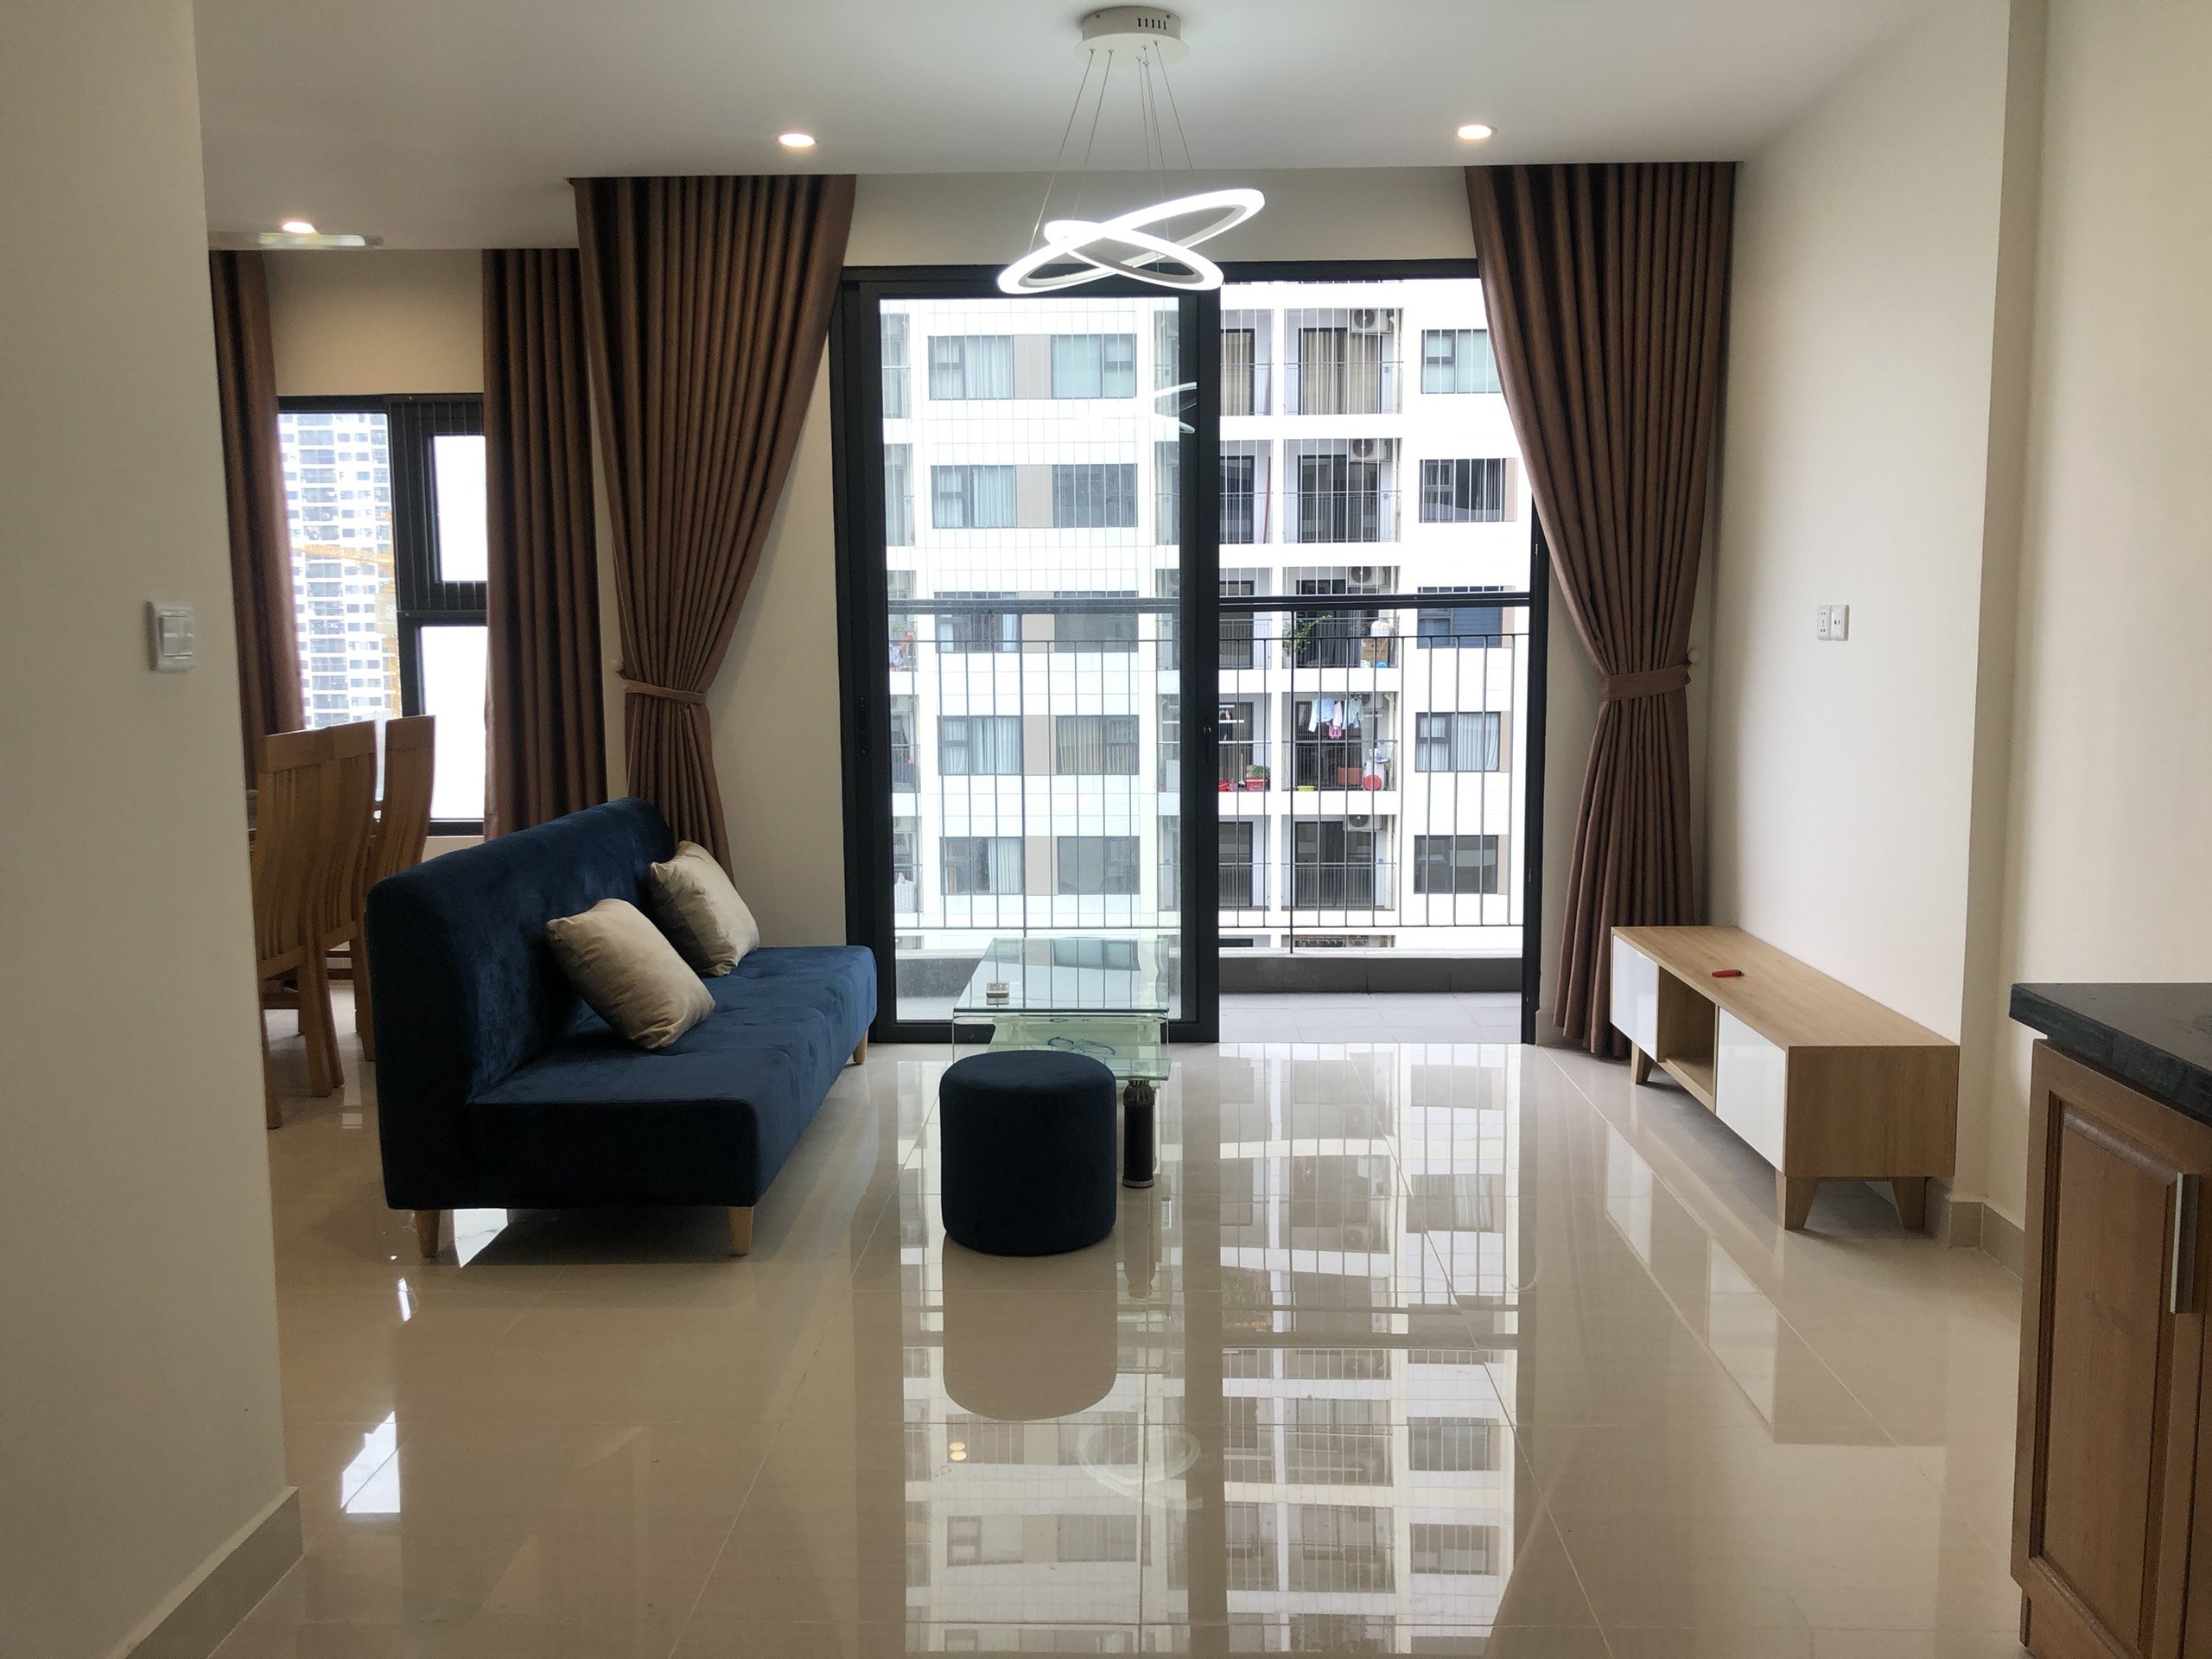 New rental 1 bedroom apartment in Vinhomes Ocean Park S212 for rent 1